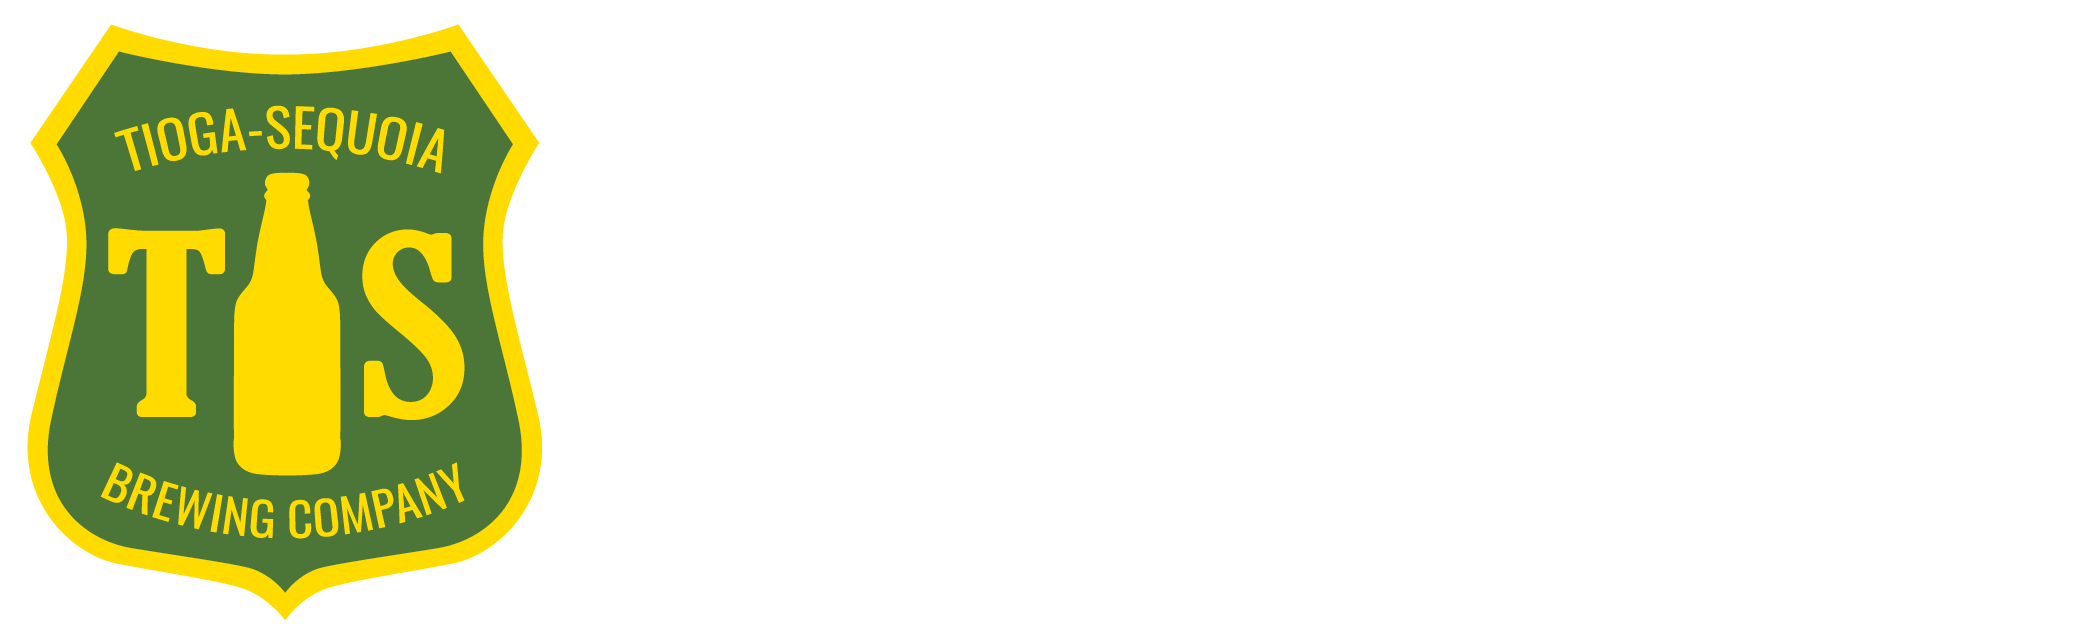 Tioga-Sequoia Brewery Co.